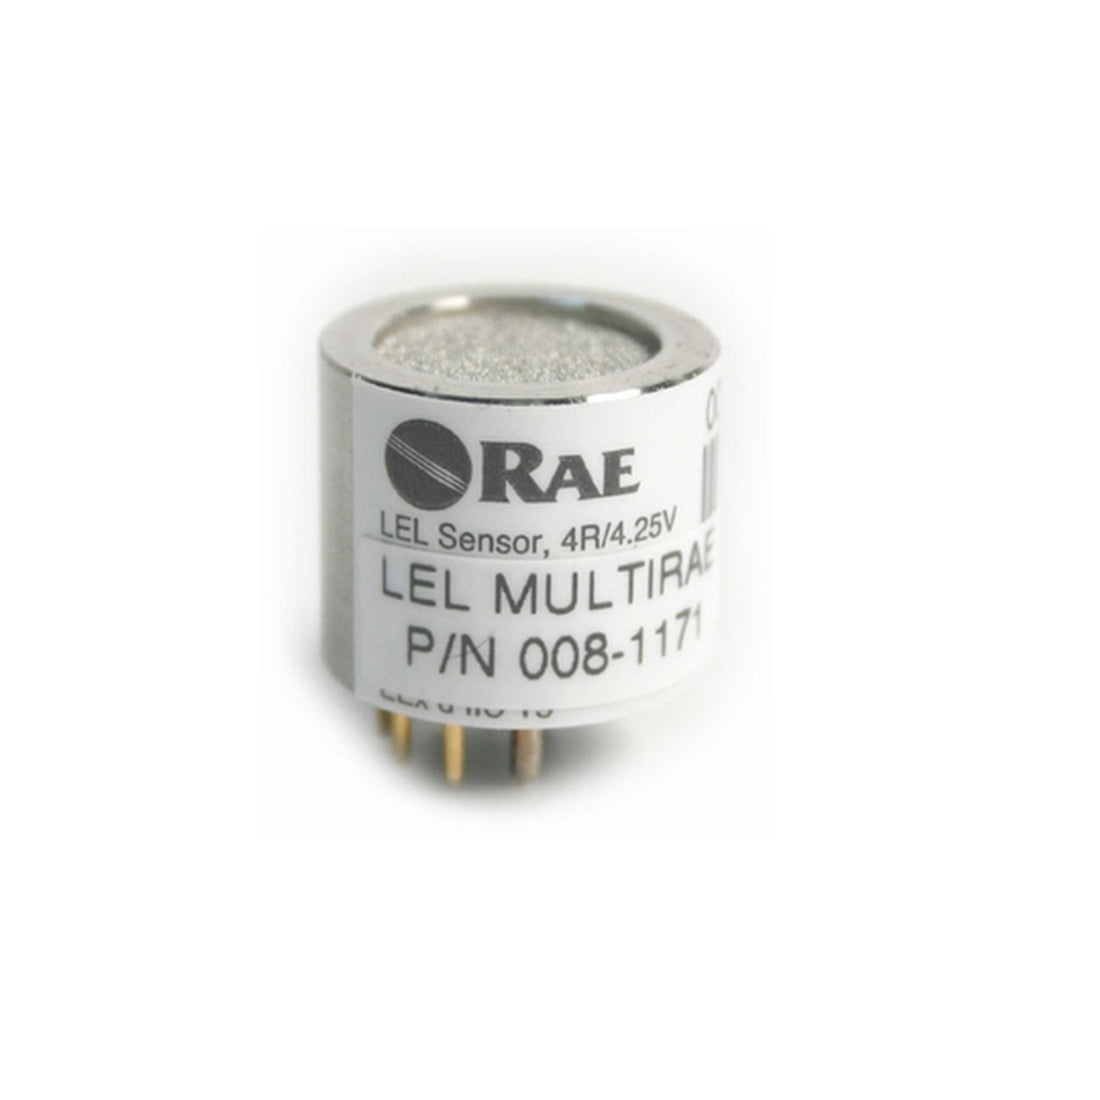 Sensor (LEL) for MultiRAE and QRAE